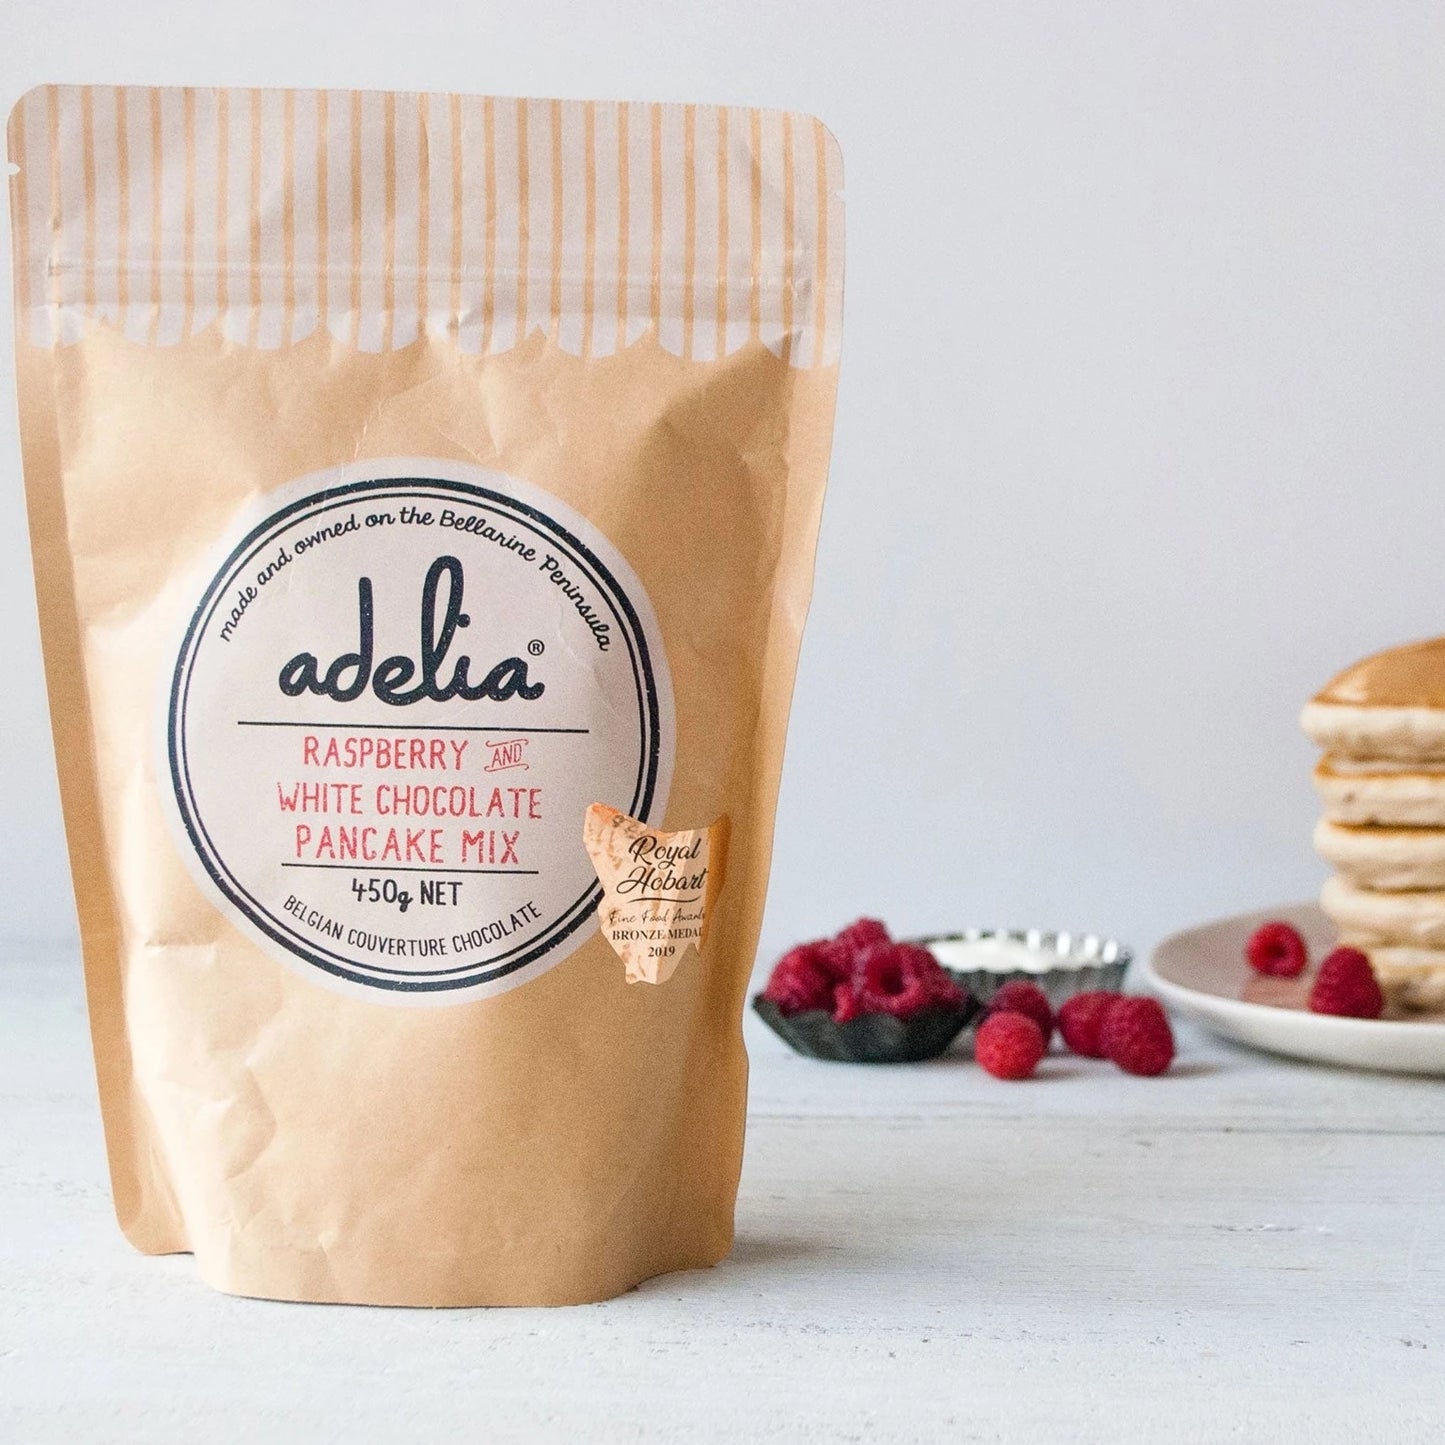 Adelia: Raspberry and White Chocolate Pancake Mix